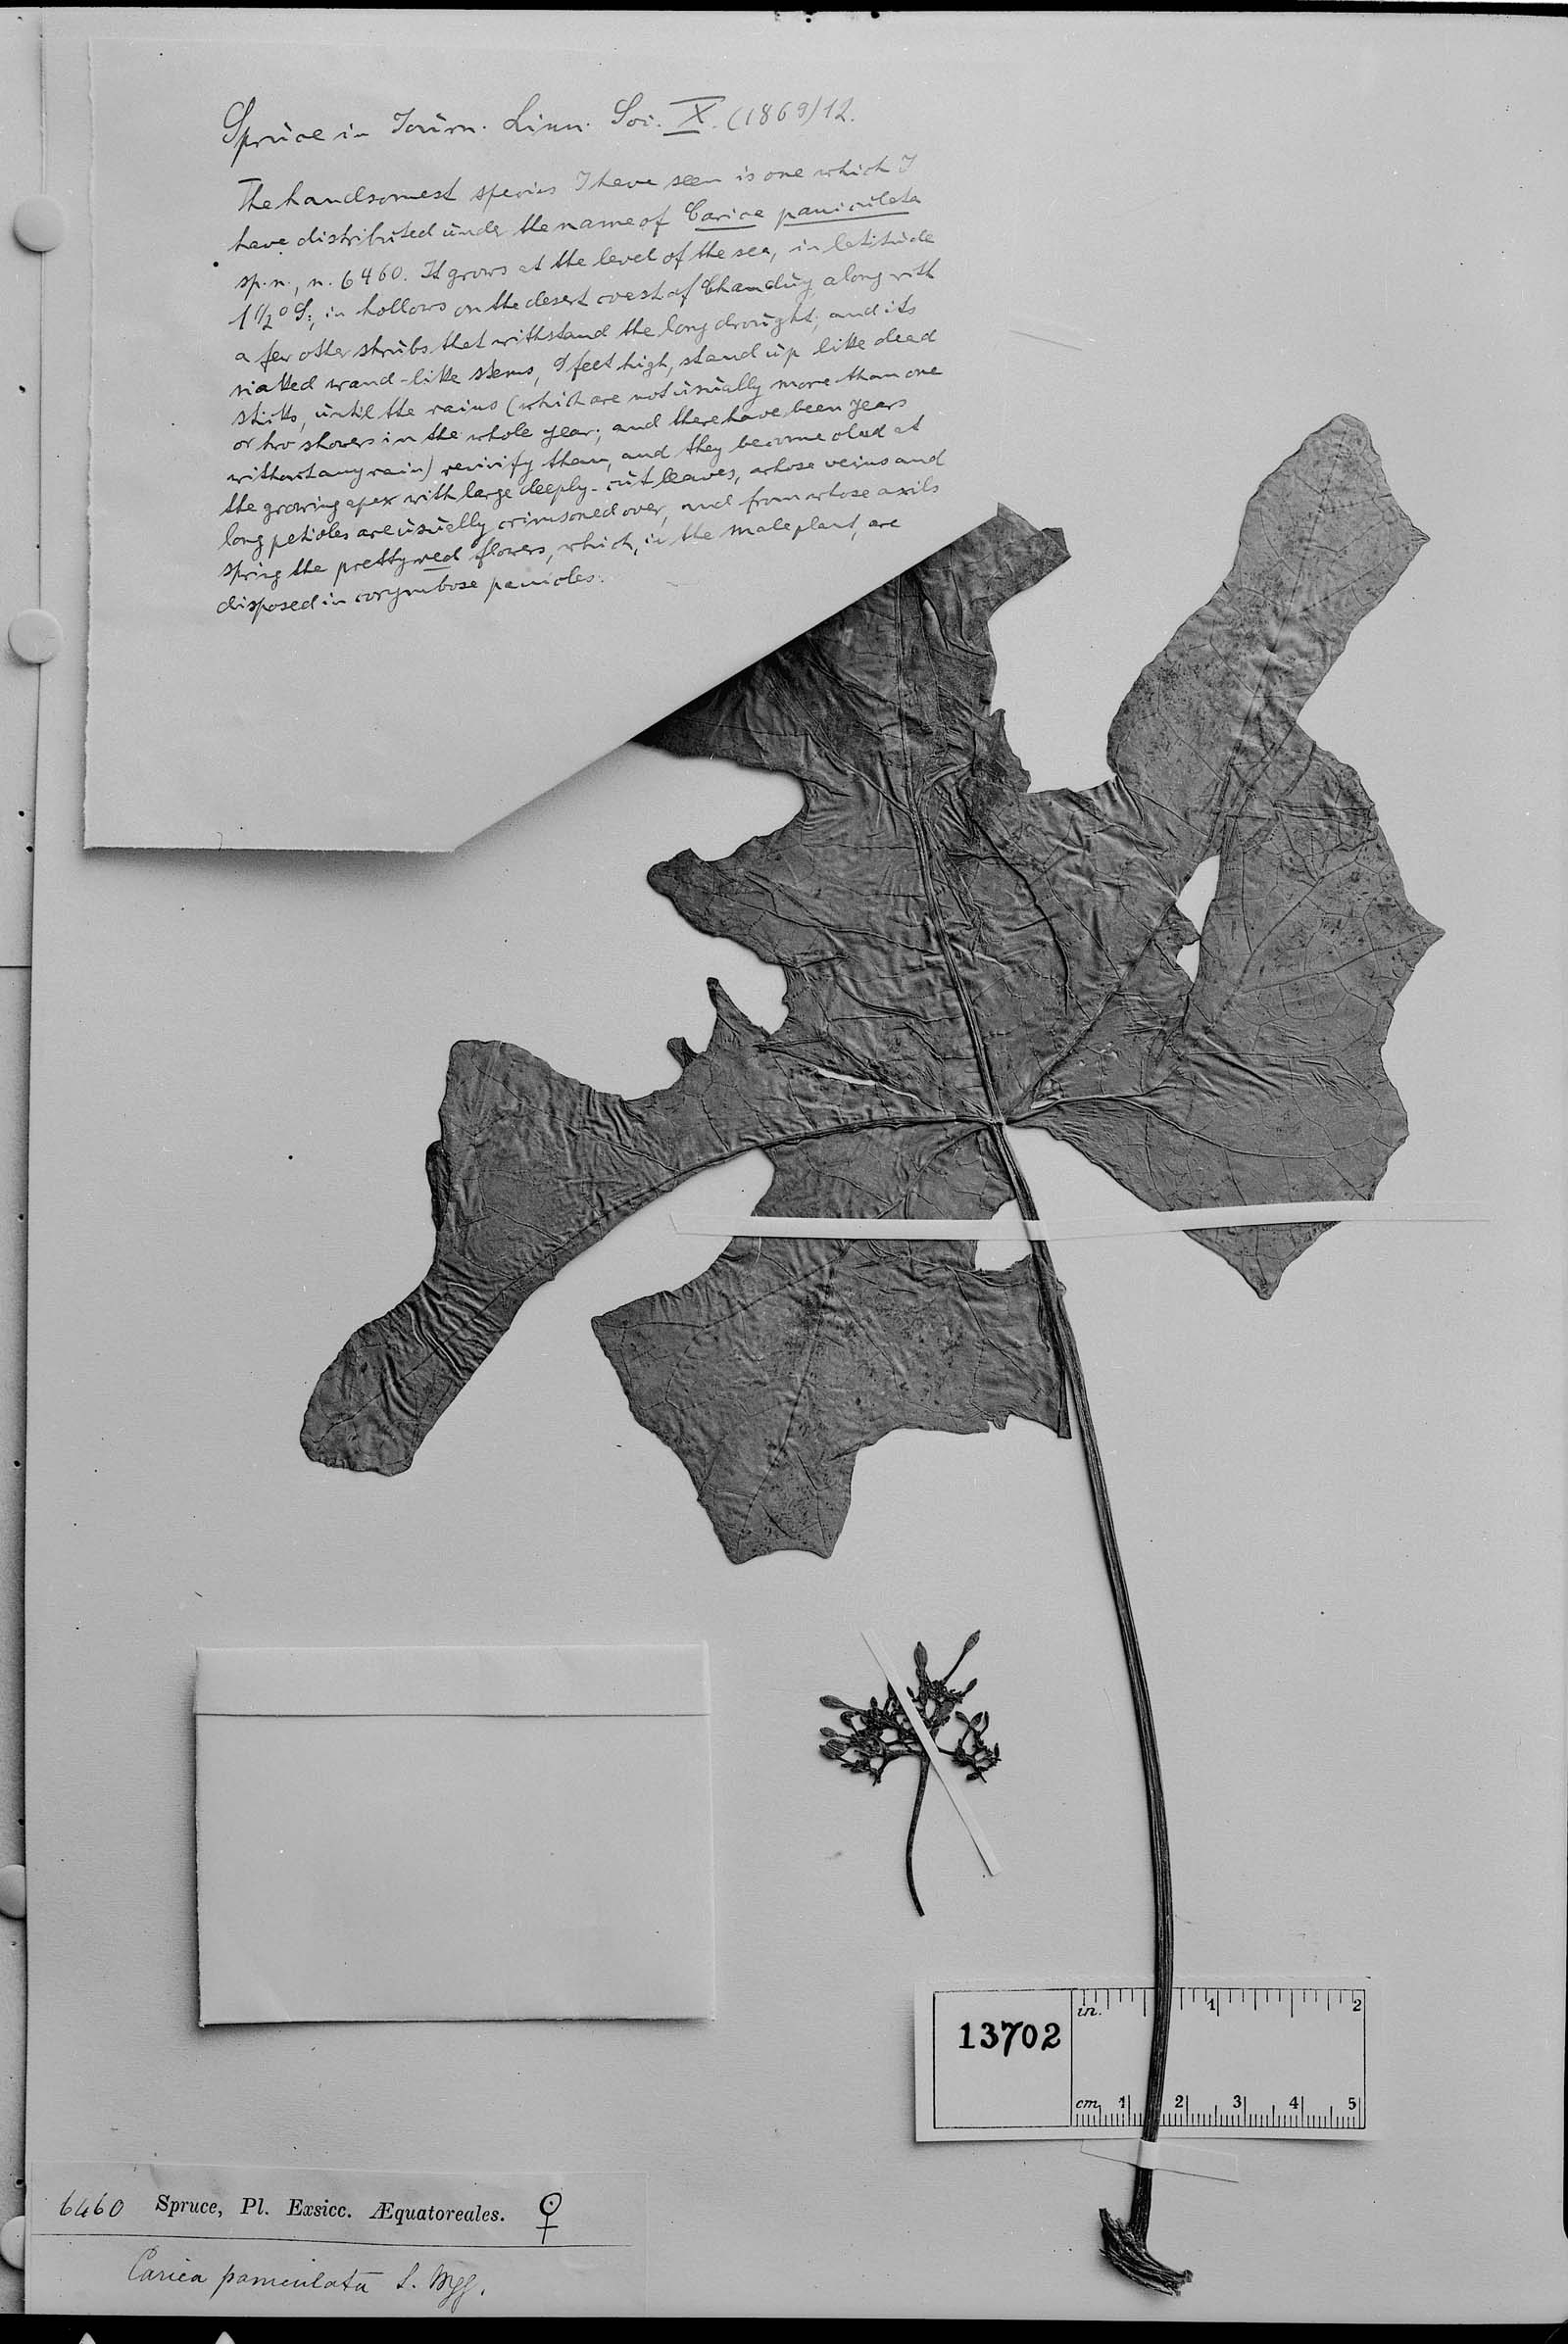 Carica paniculata image